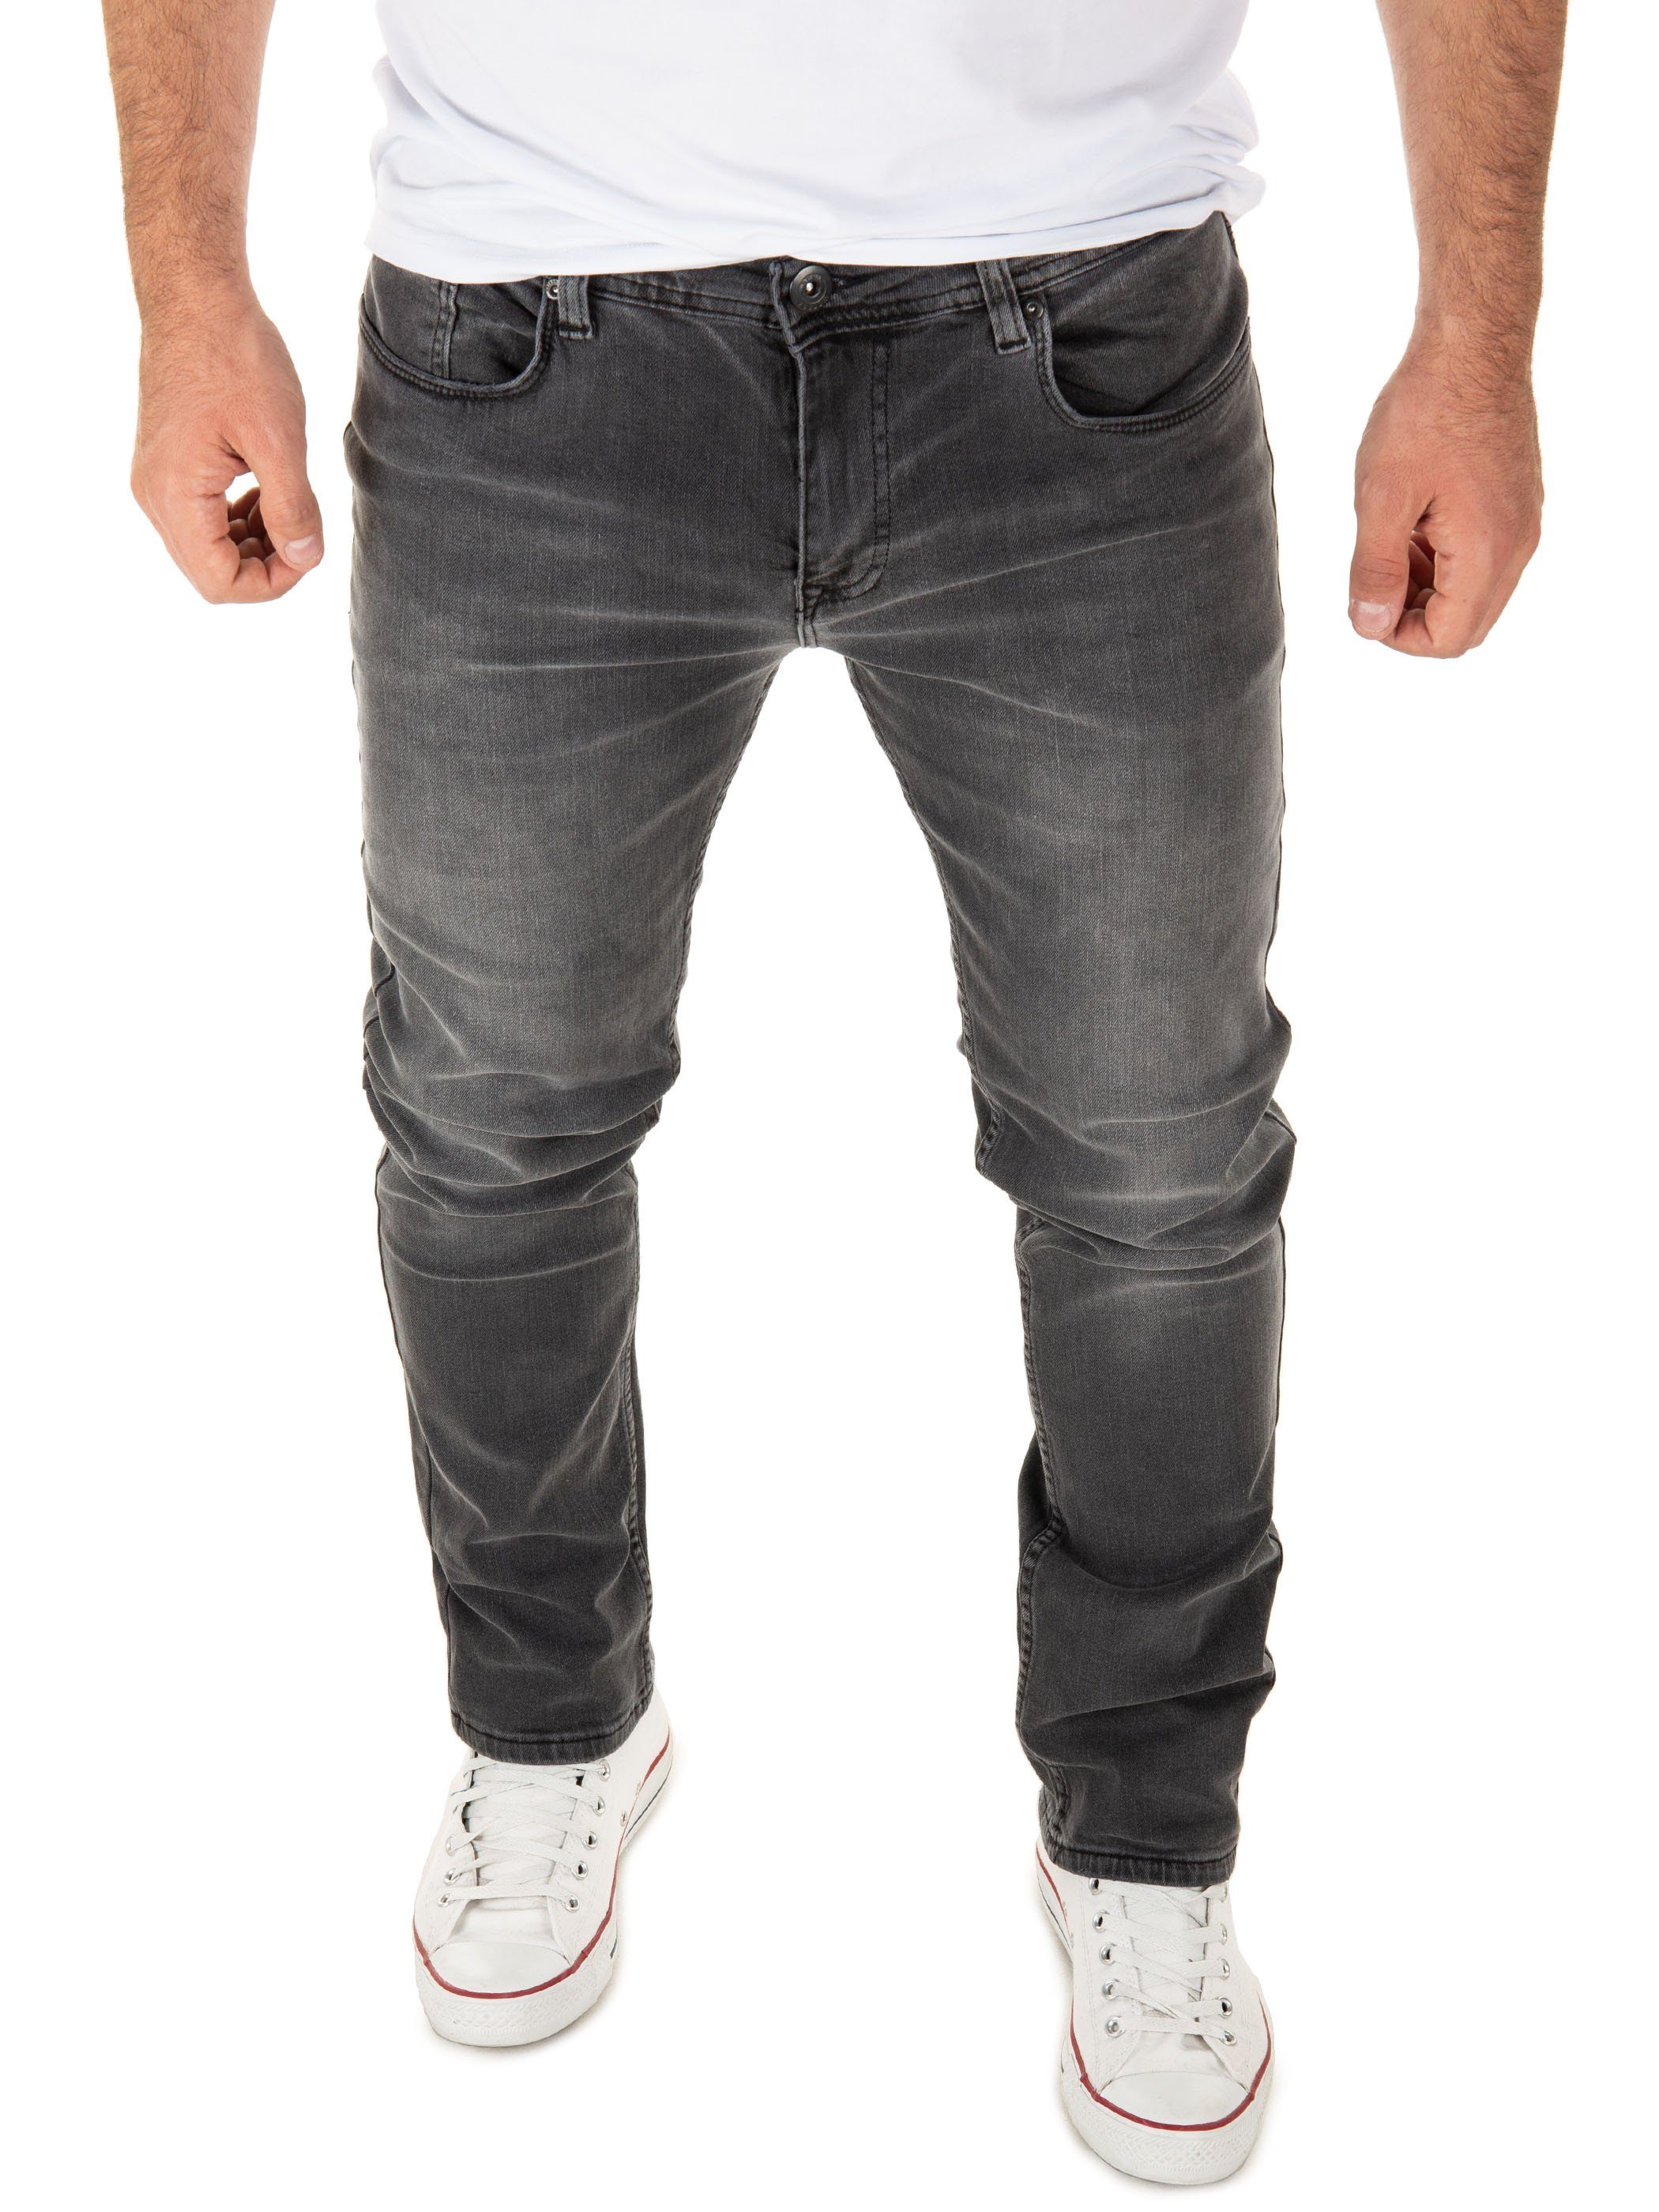 Grau 193901) Jeanshose Stretch mit Stretchanteil WOTEGA Slim-fit-Jeans (Magnet Herren Jeans Justin